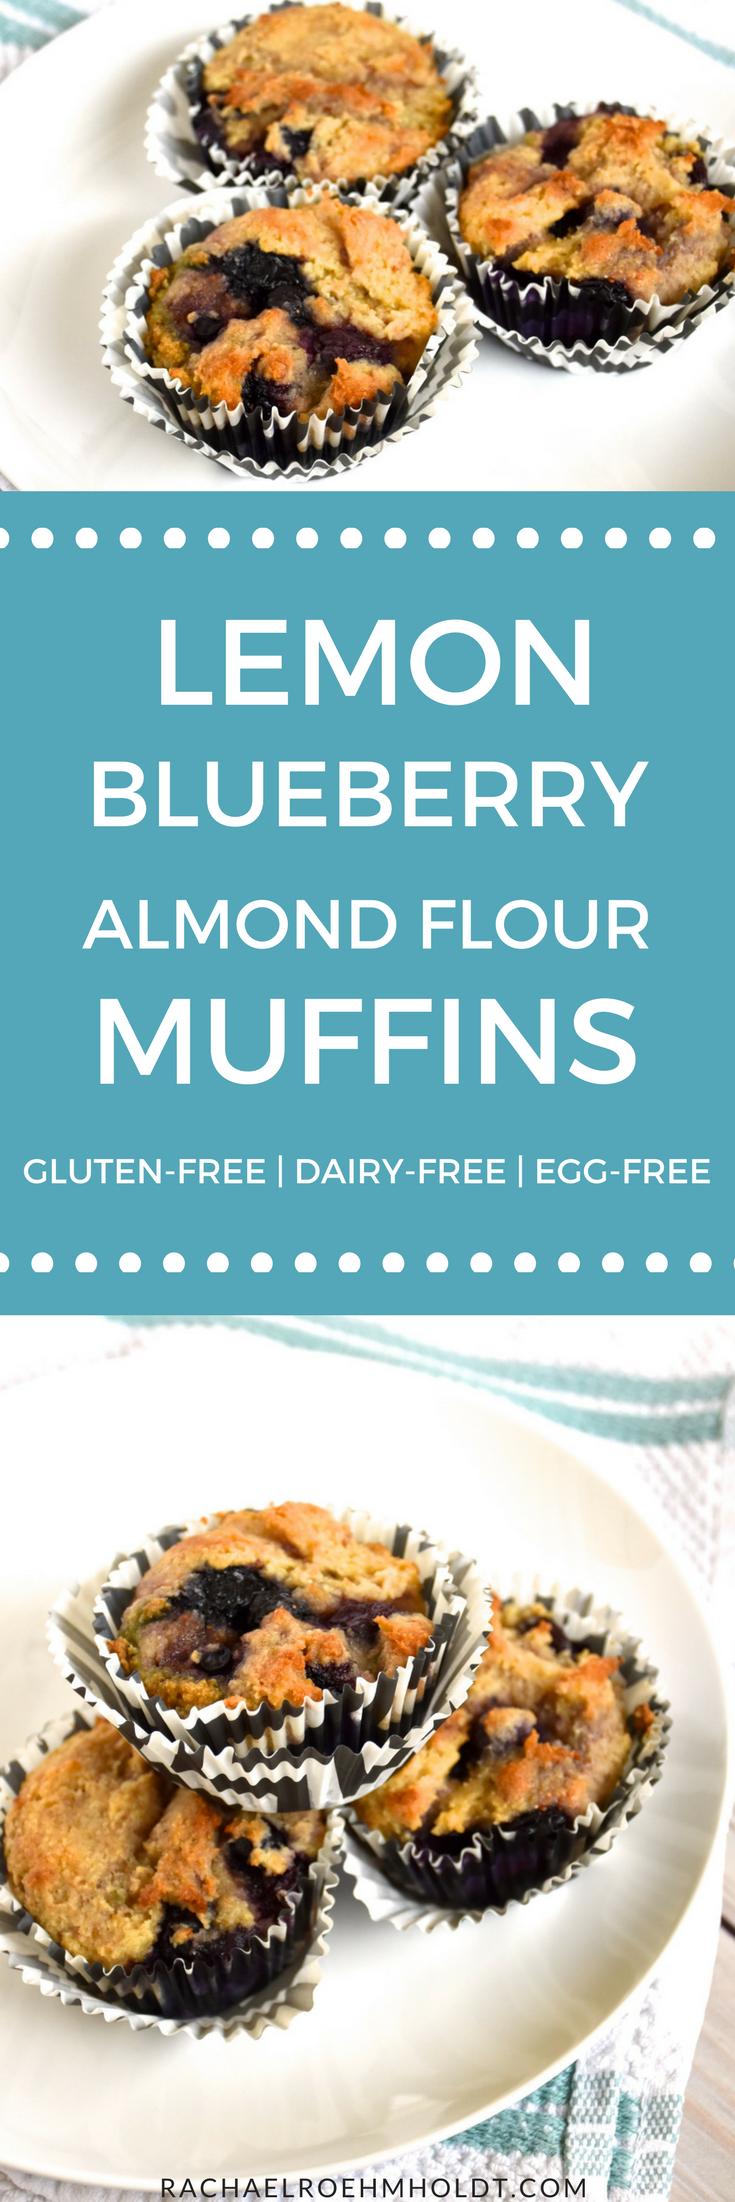 Lemon Blueberry Almond Flour Muffins